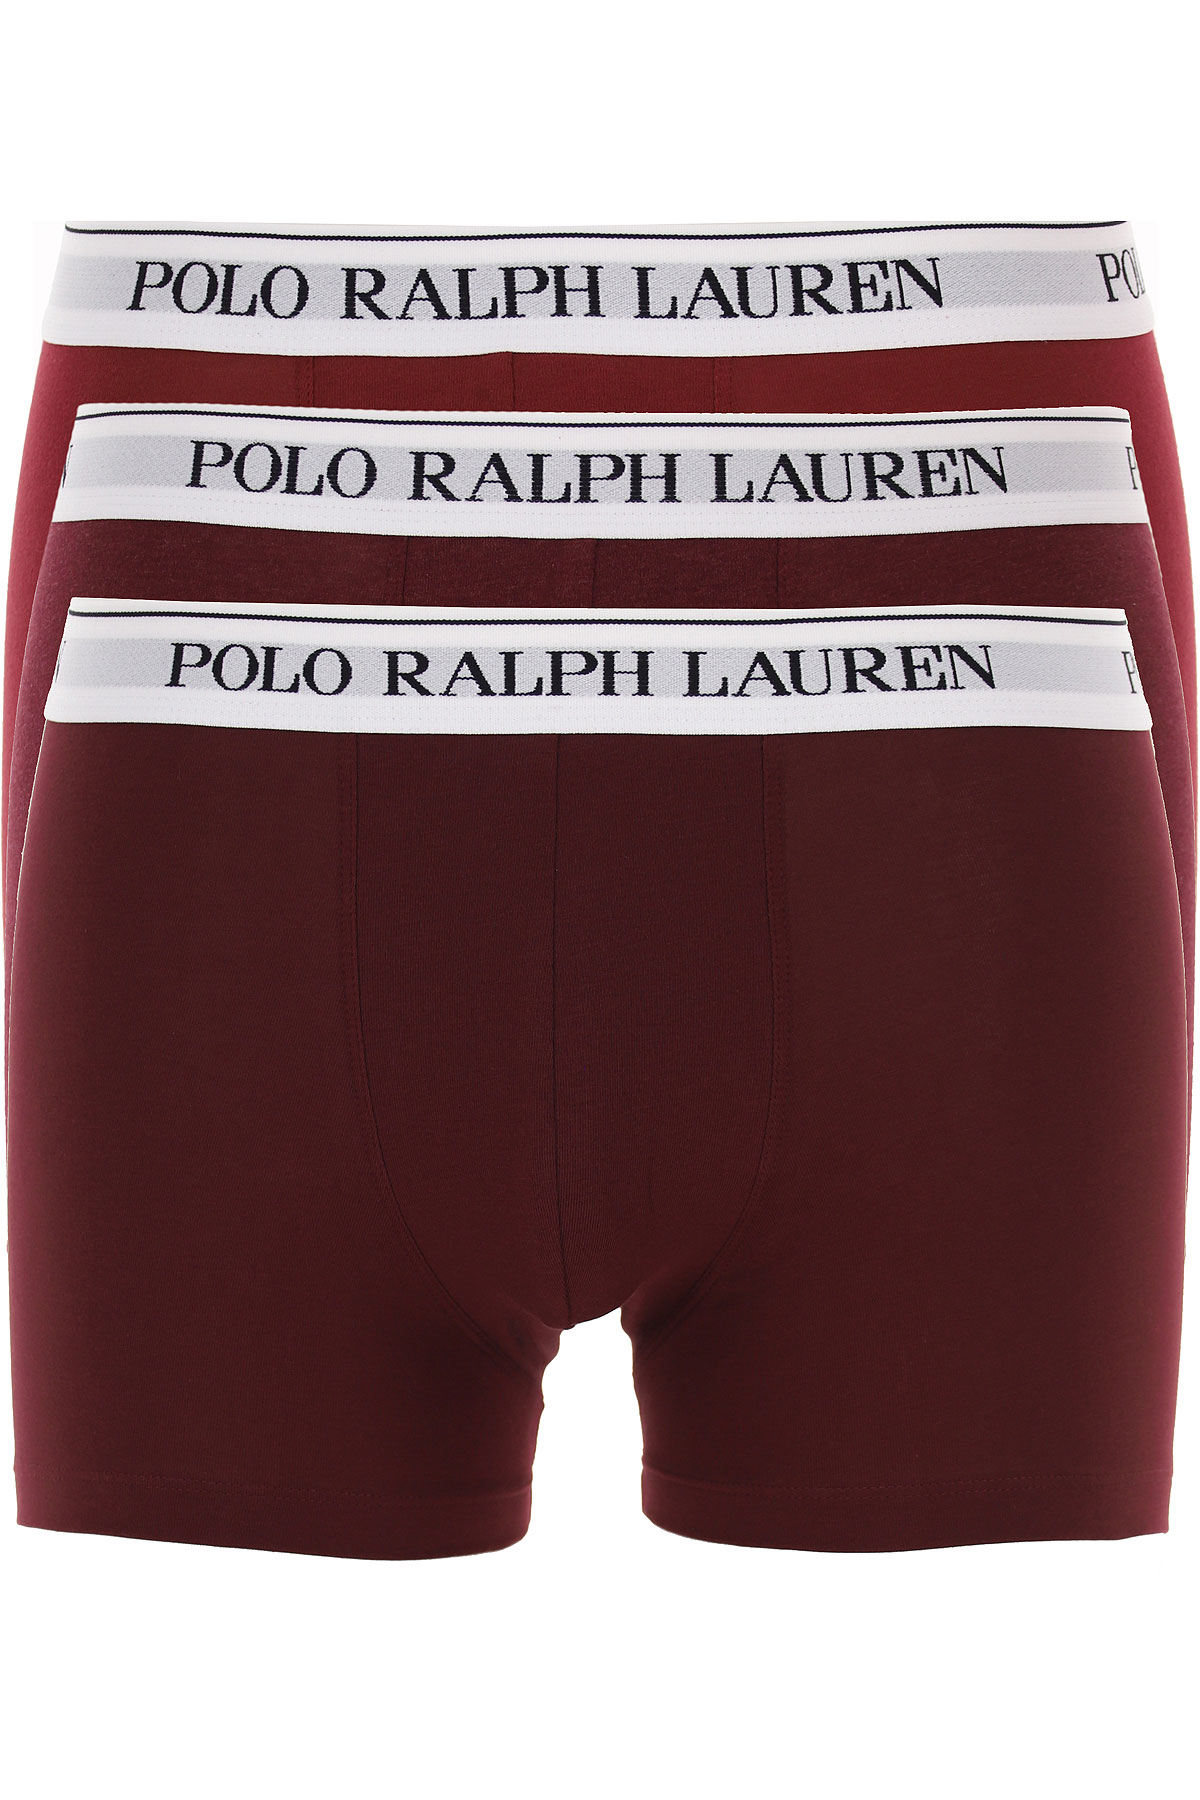 Mens Underwear Ralph Lauren, Style code: 714830300026